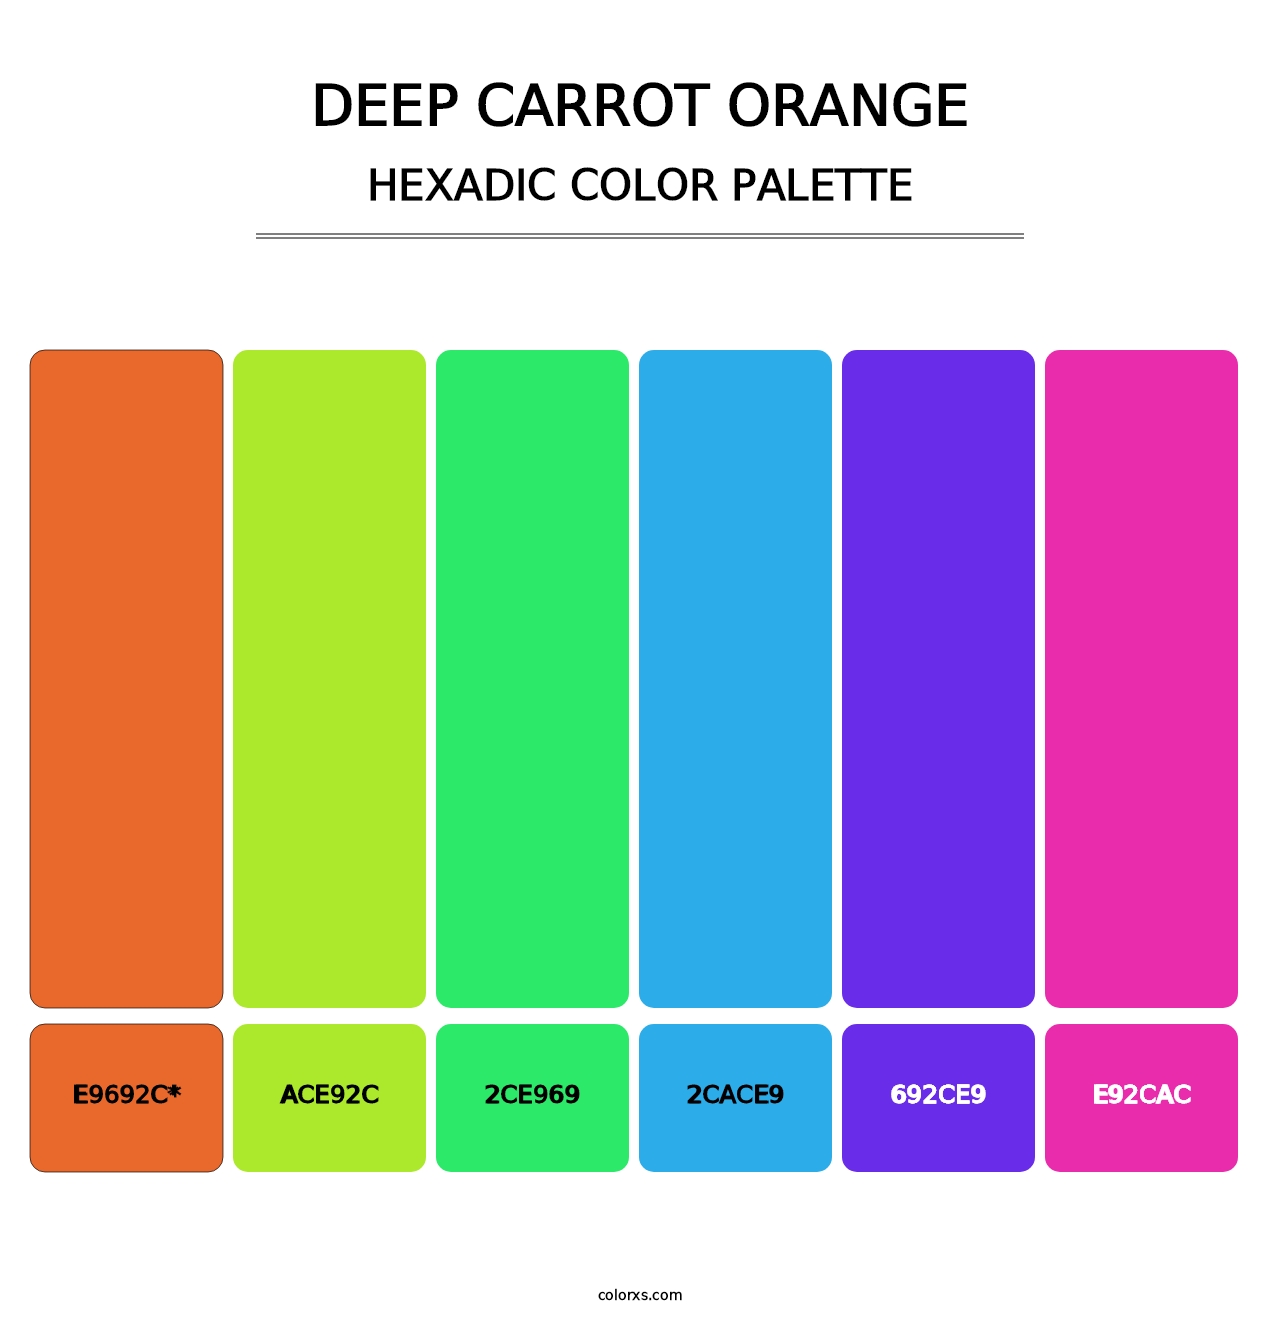 Deep Carrot Orange - Hexadic Color Palette